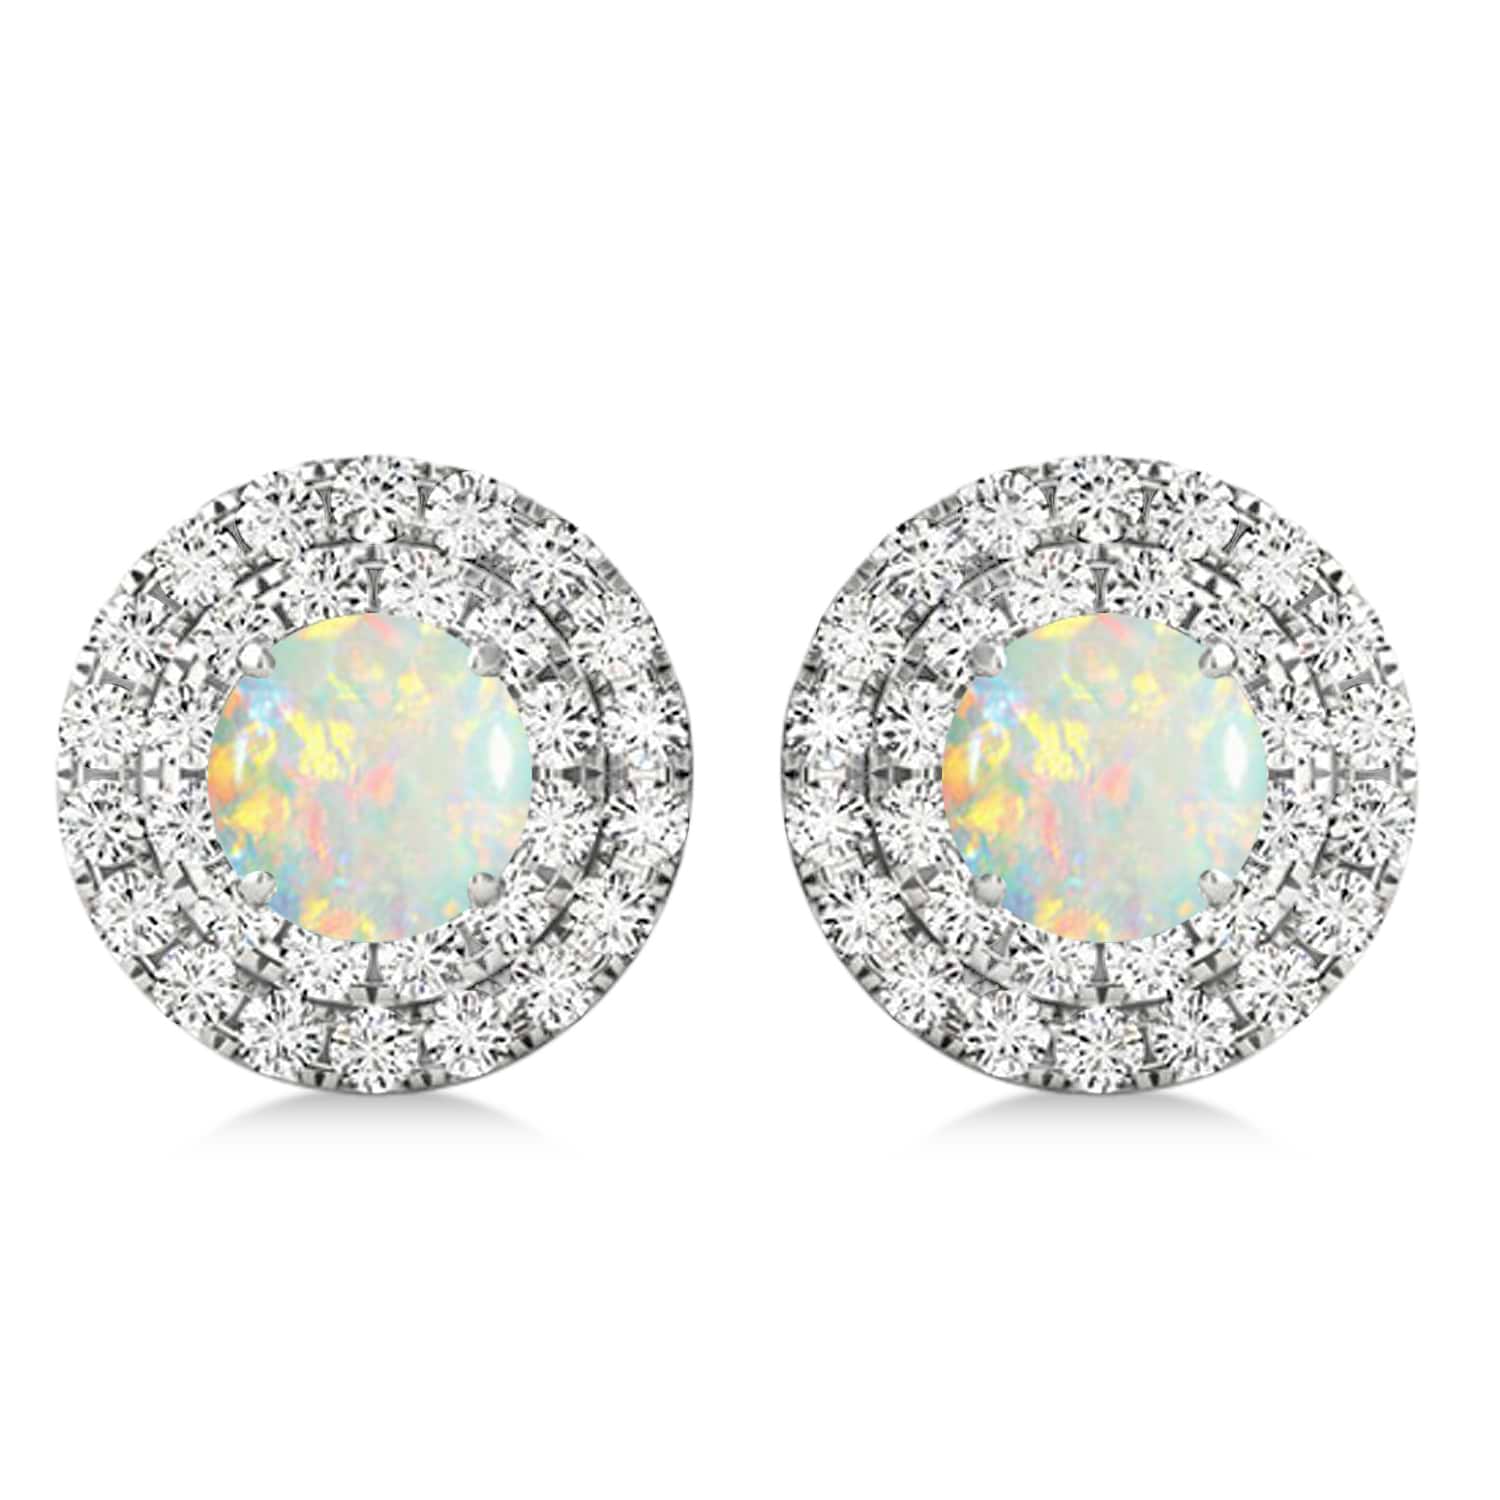 Round Double Halo Diamond & Opal Earrings 14k White Gold 1.13ct